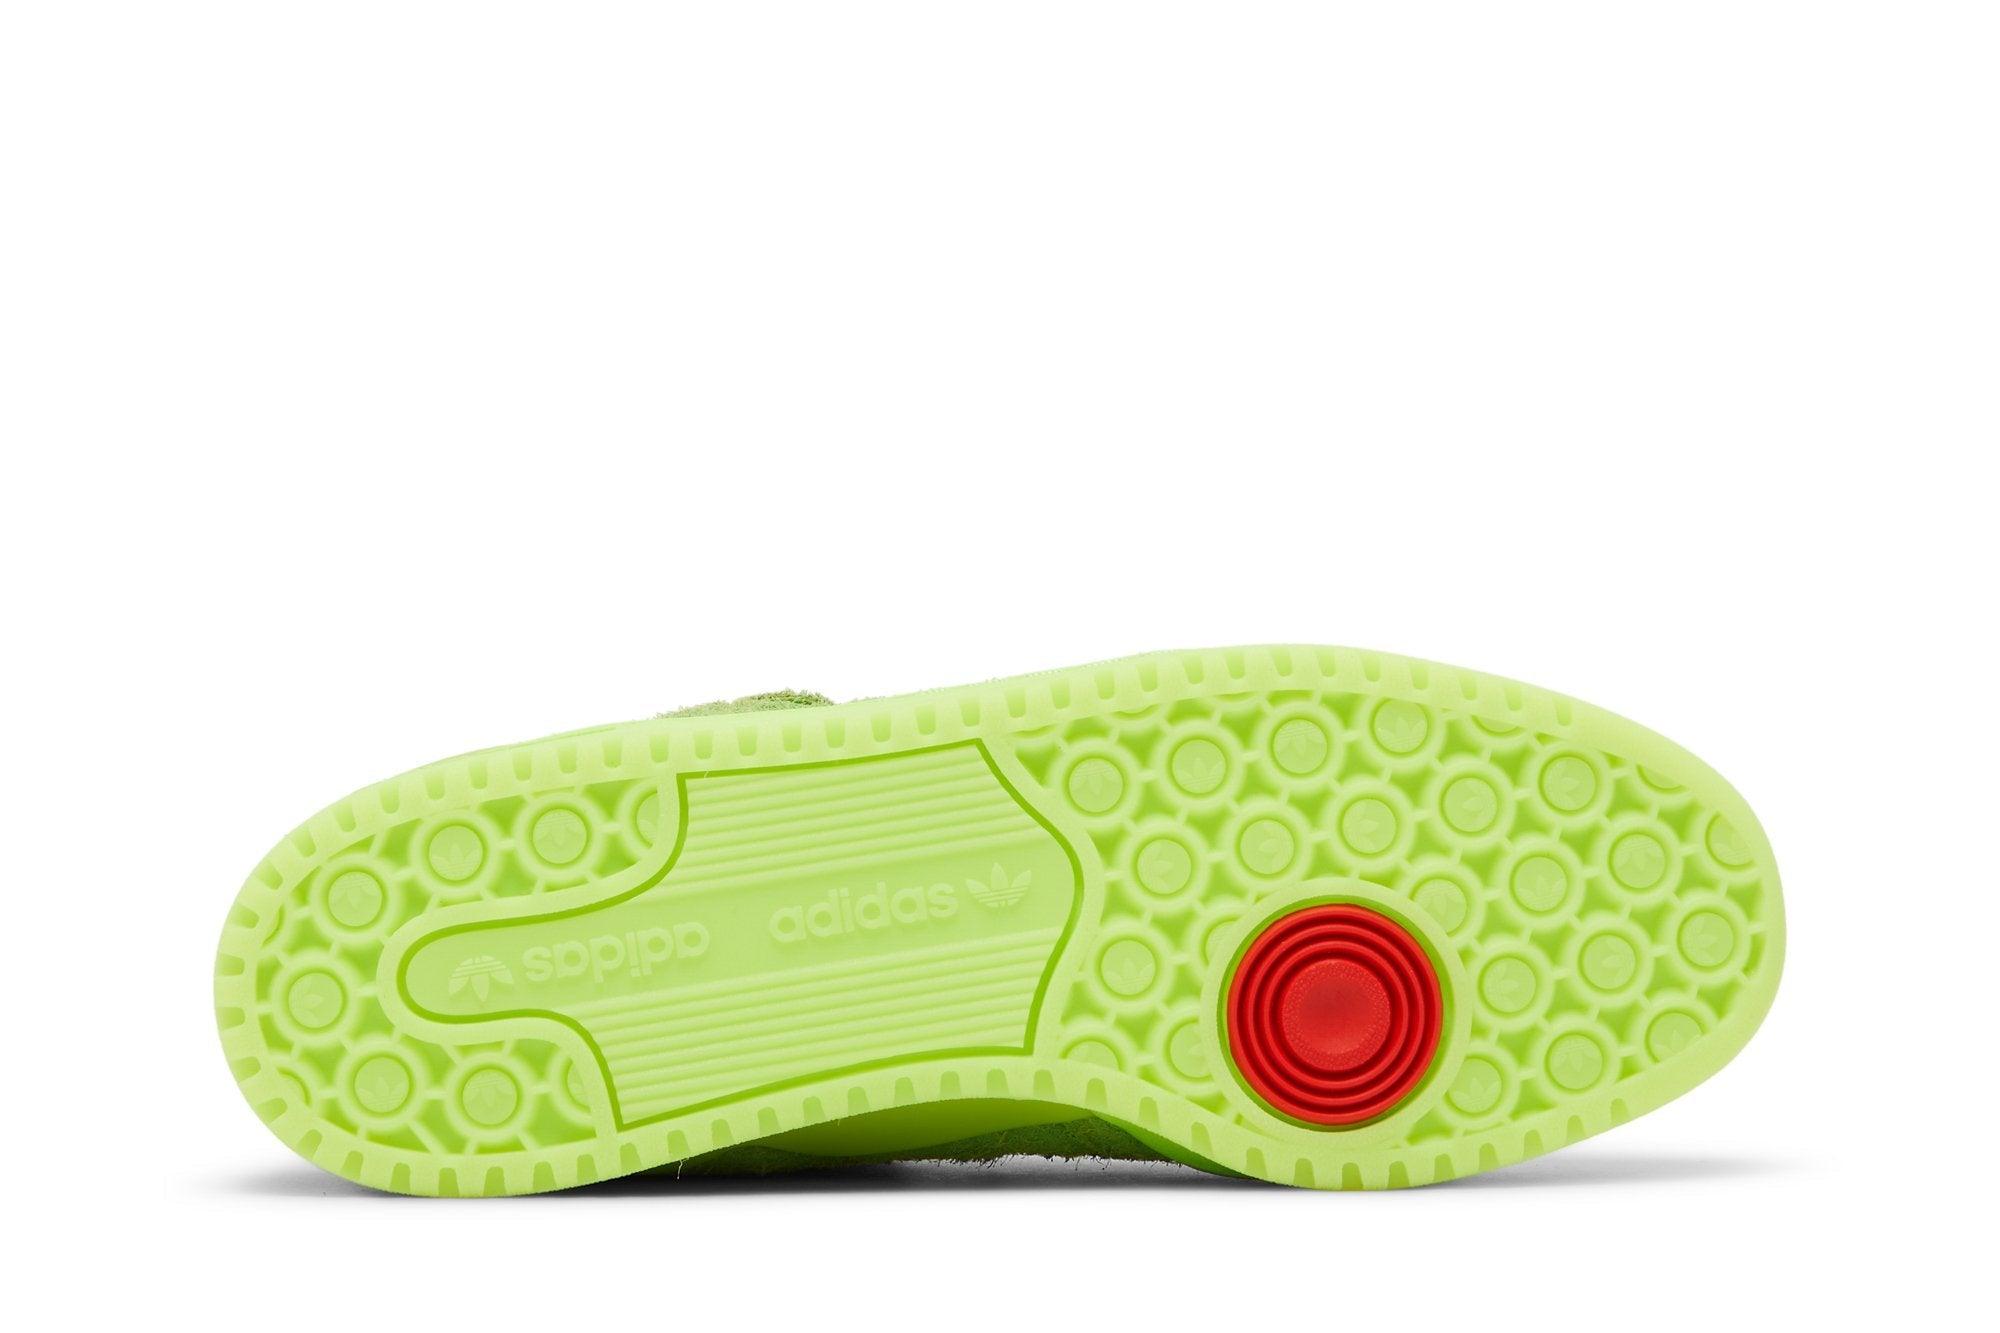 Tênis The Grinch x adidas Forum Low Green Verde - LK Sneakers